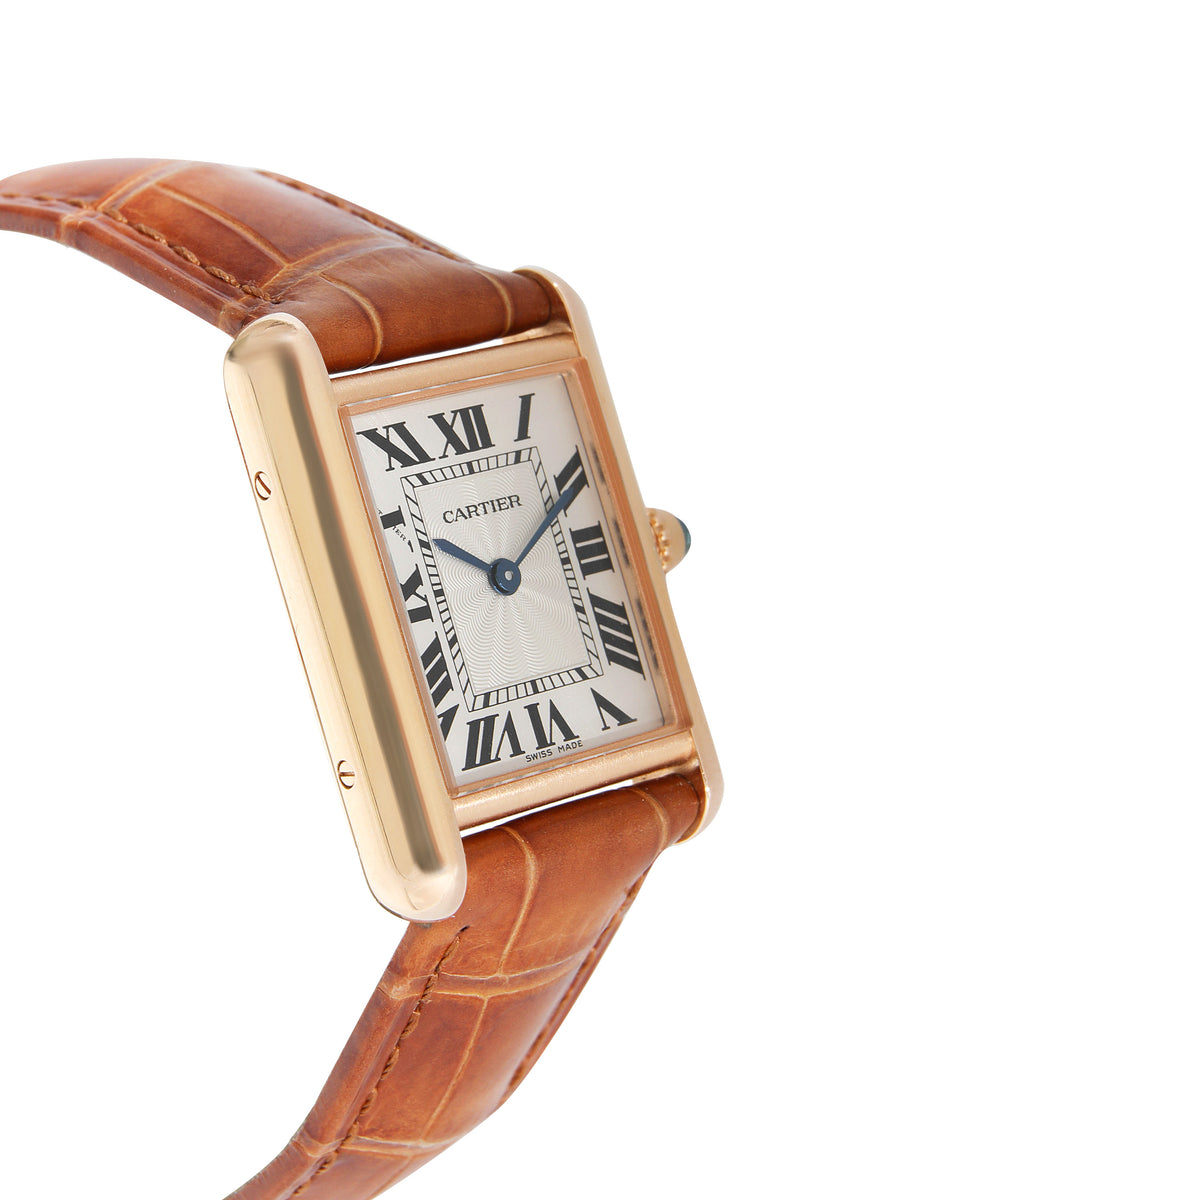 Cartier Tank Louis Cartier WGTA0010 Women's Watch in 18kt Rose Gold